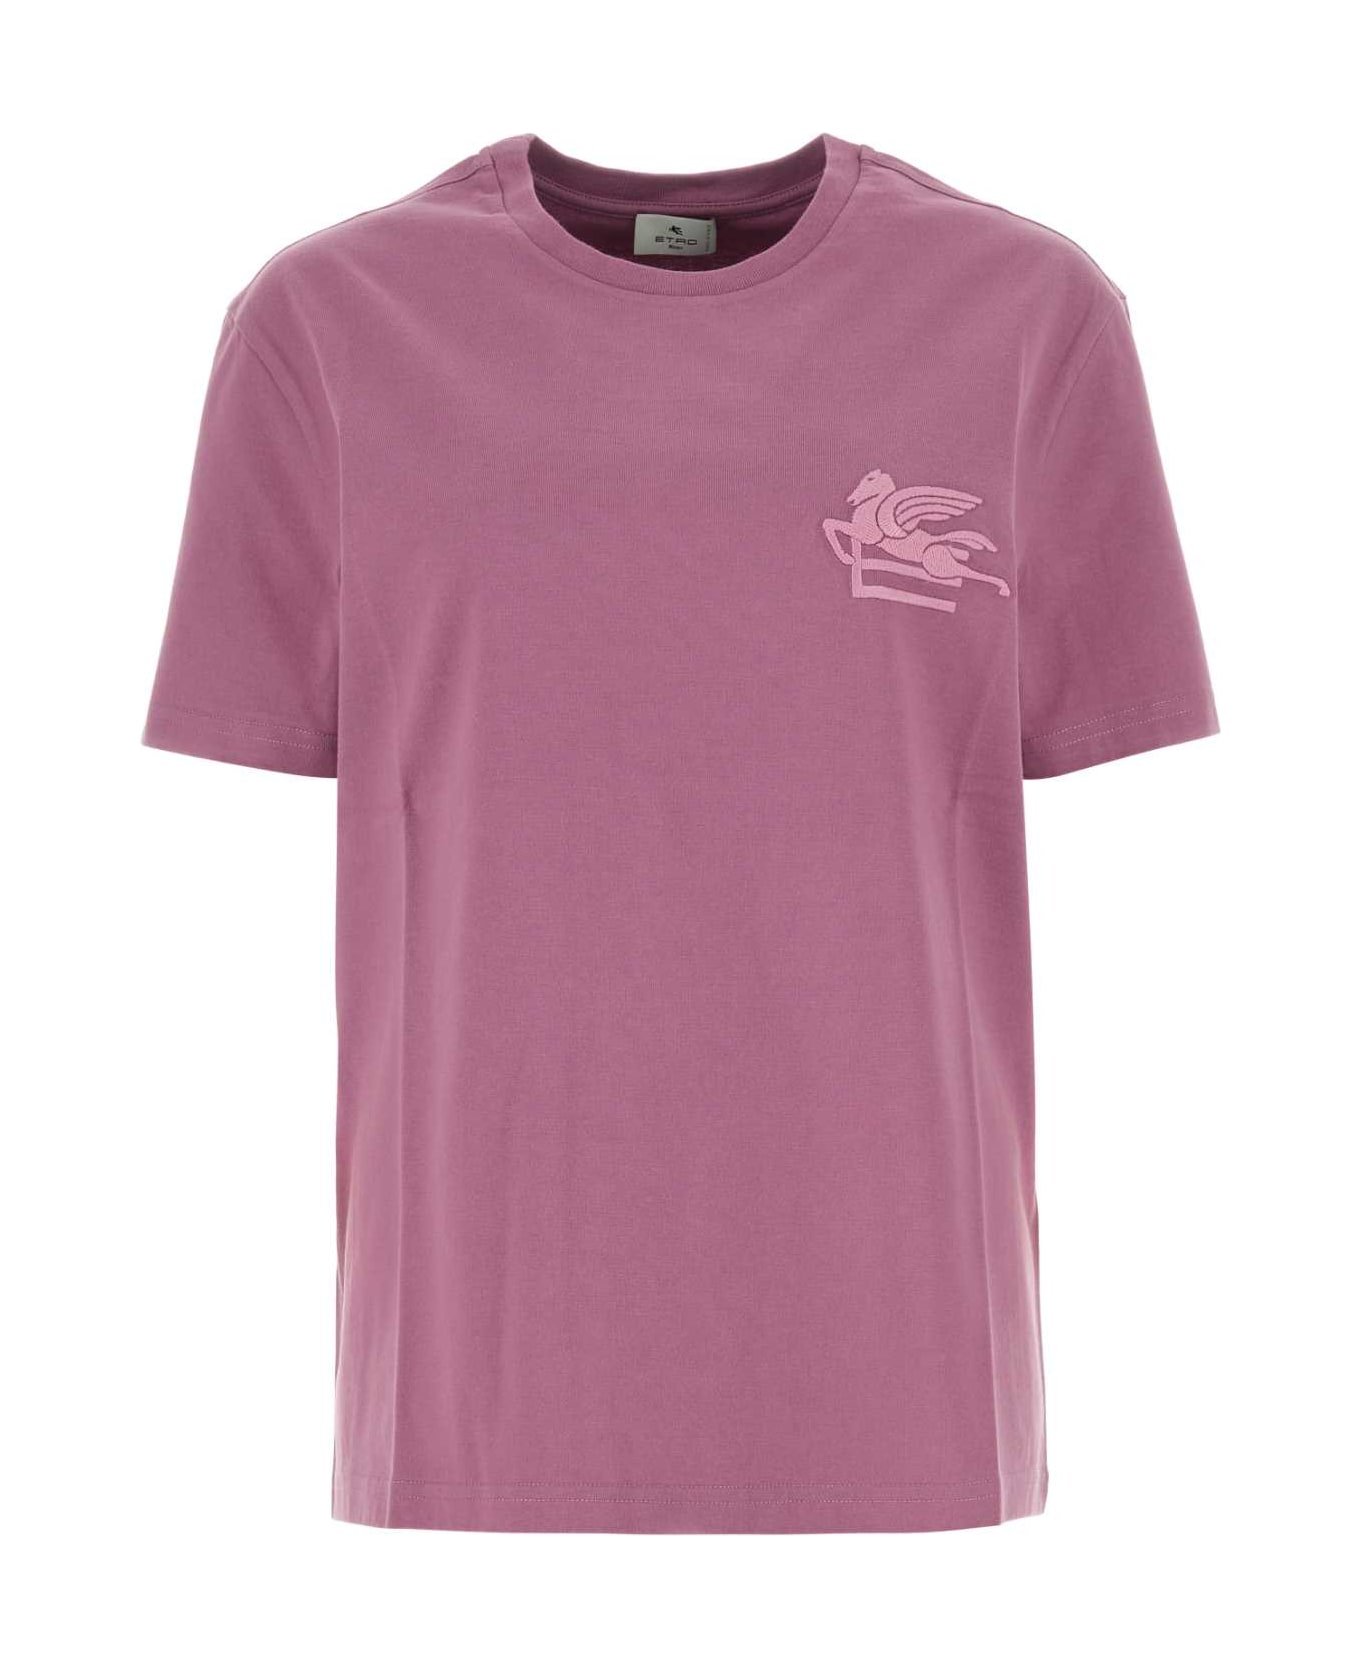 Etro Light Purple Cotton T-shirt - PINK